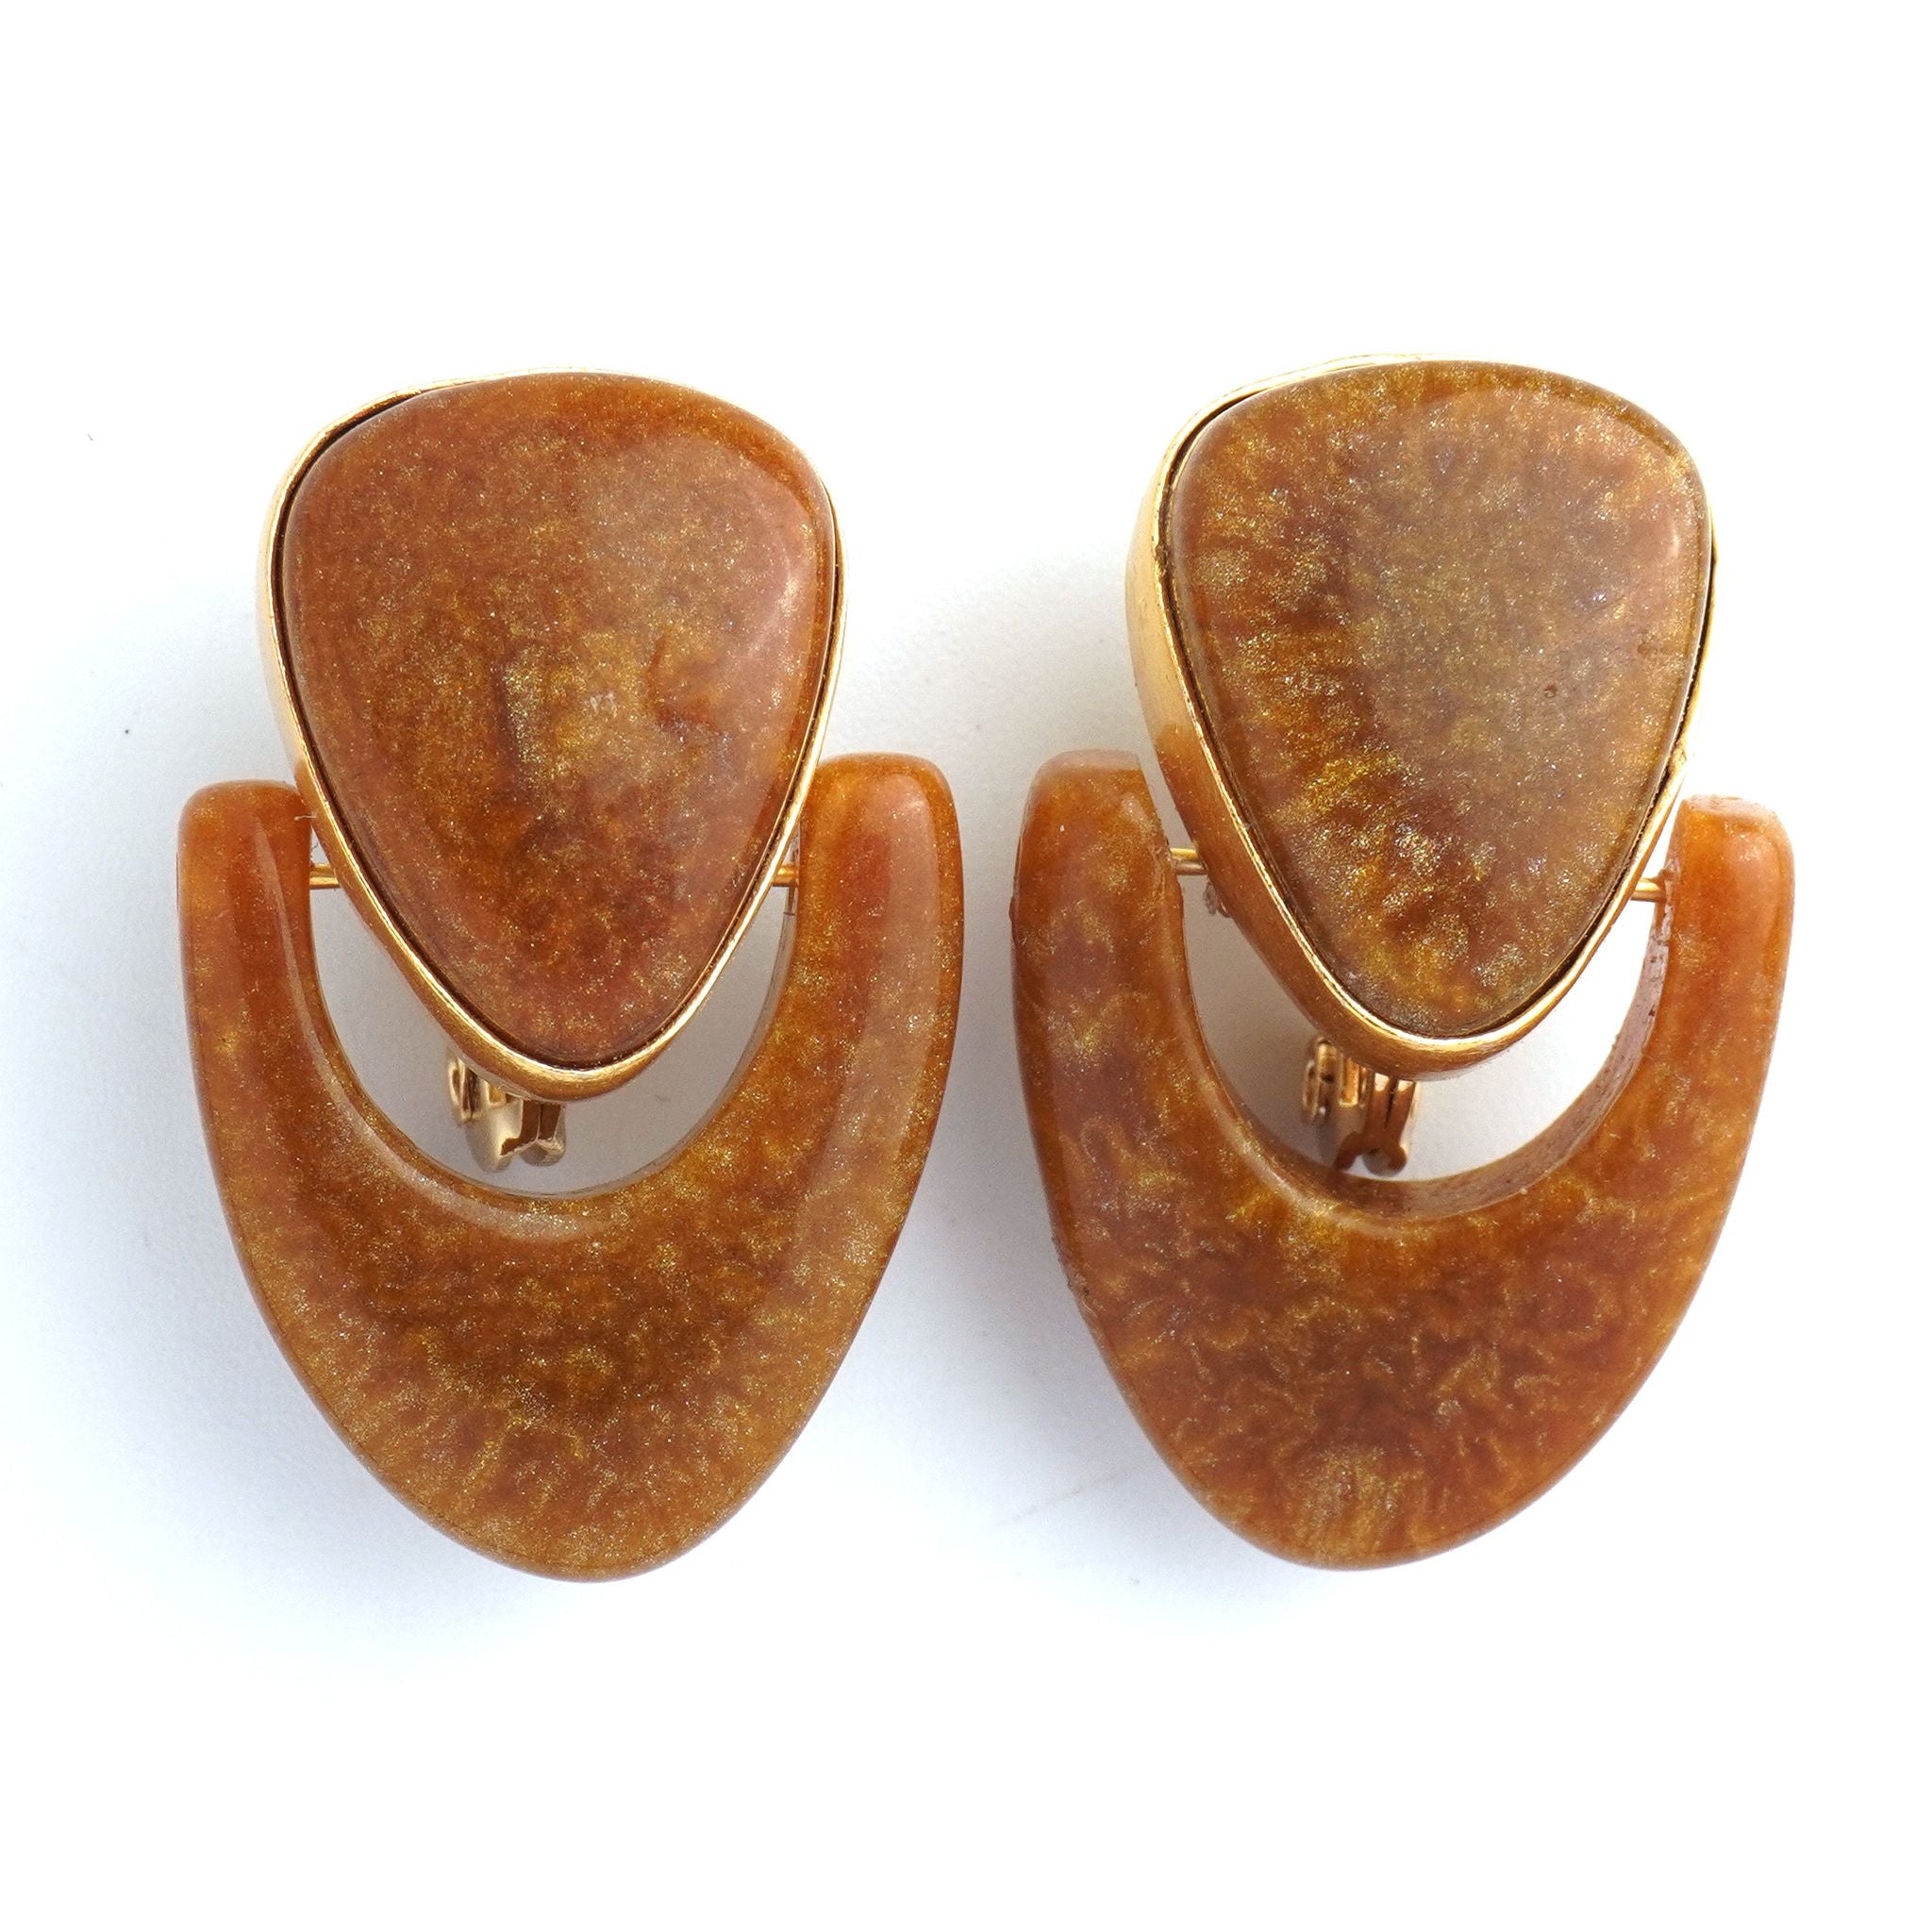 Marble motif earrings